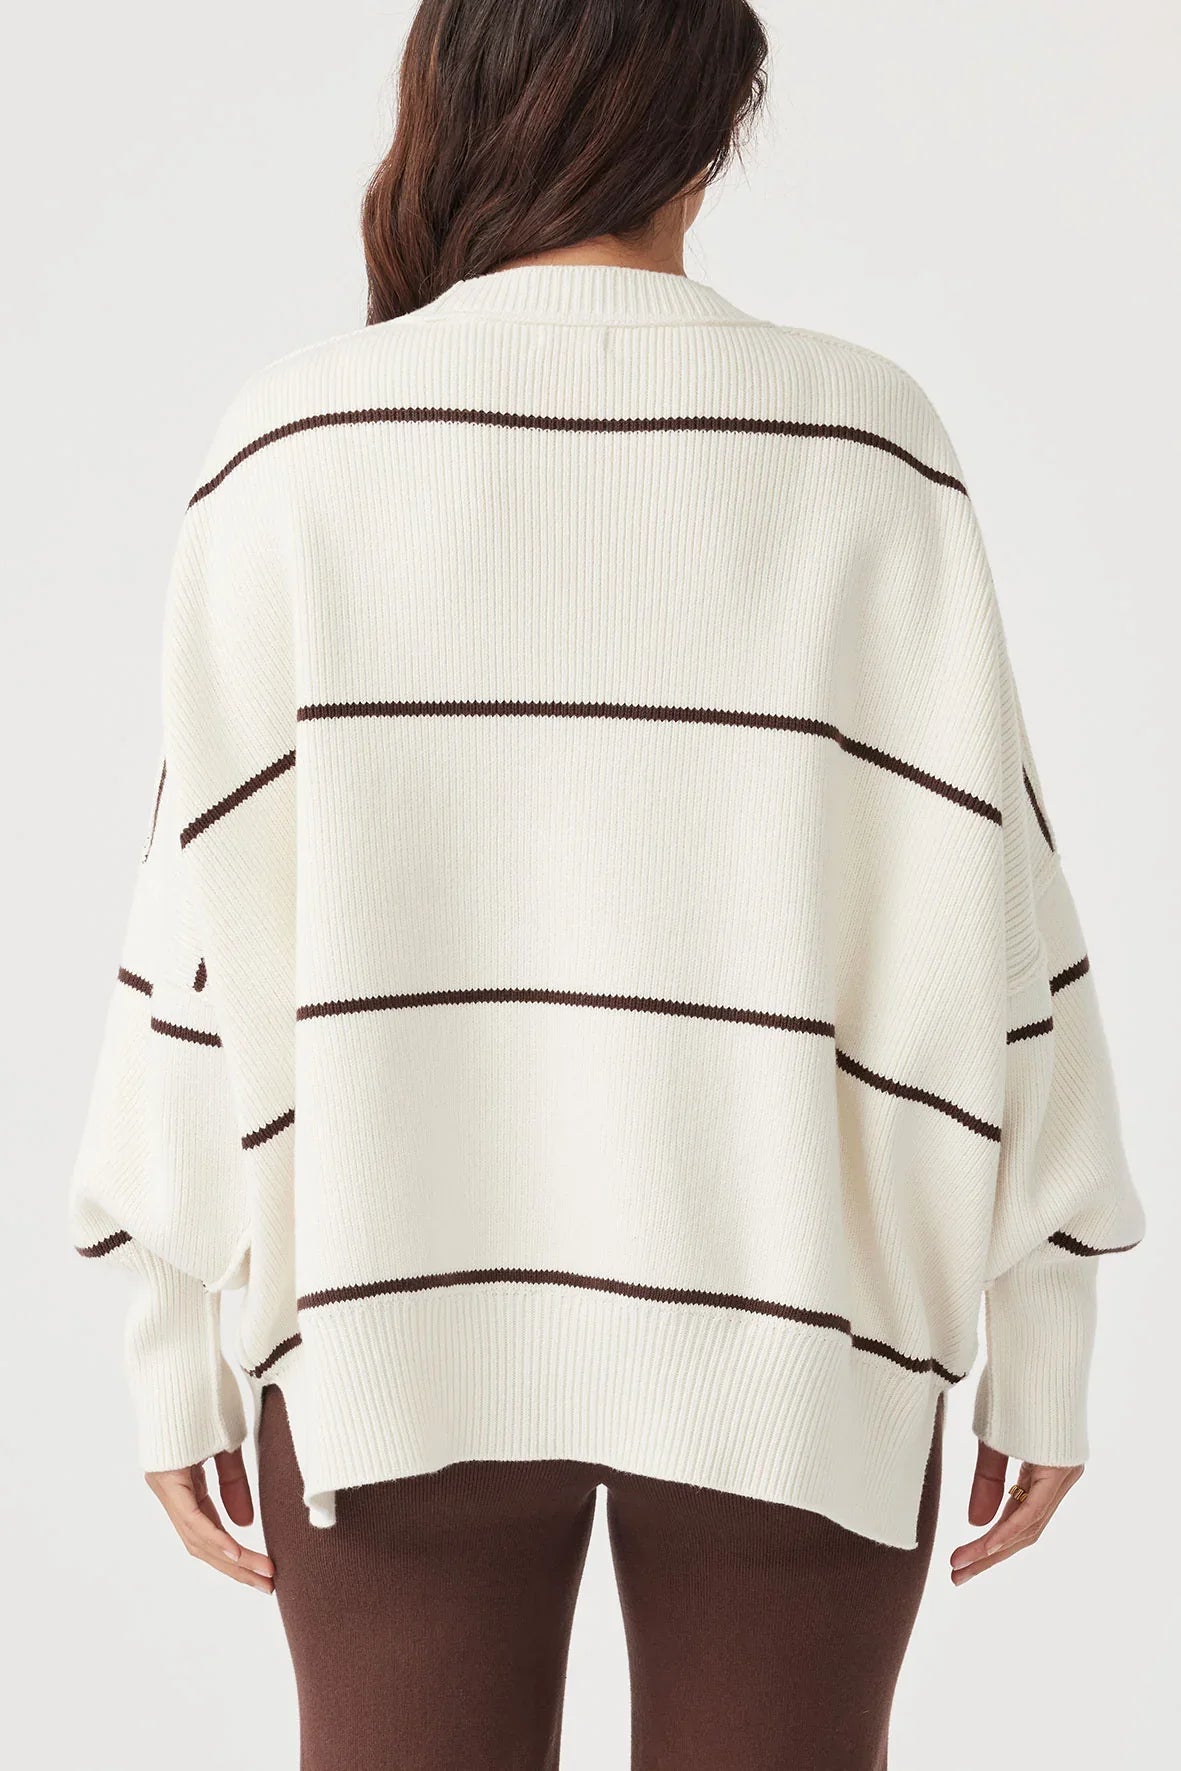 Harper Stripe Sweater - Cream & Chocolate